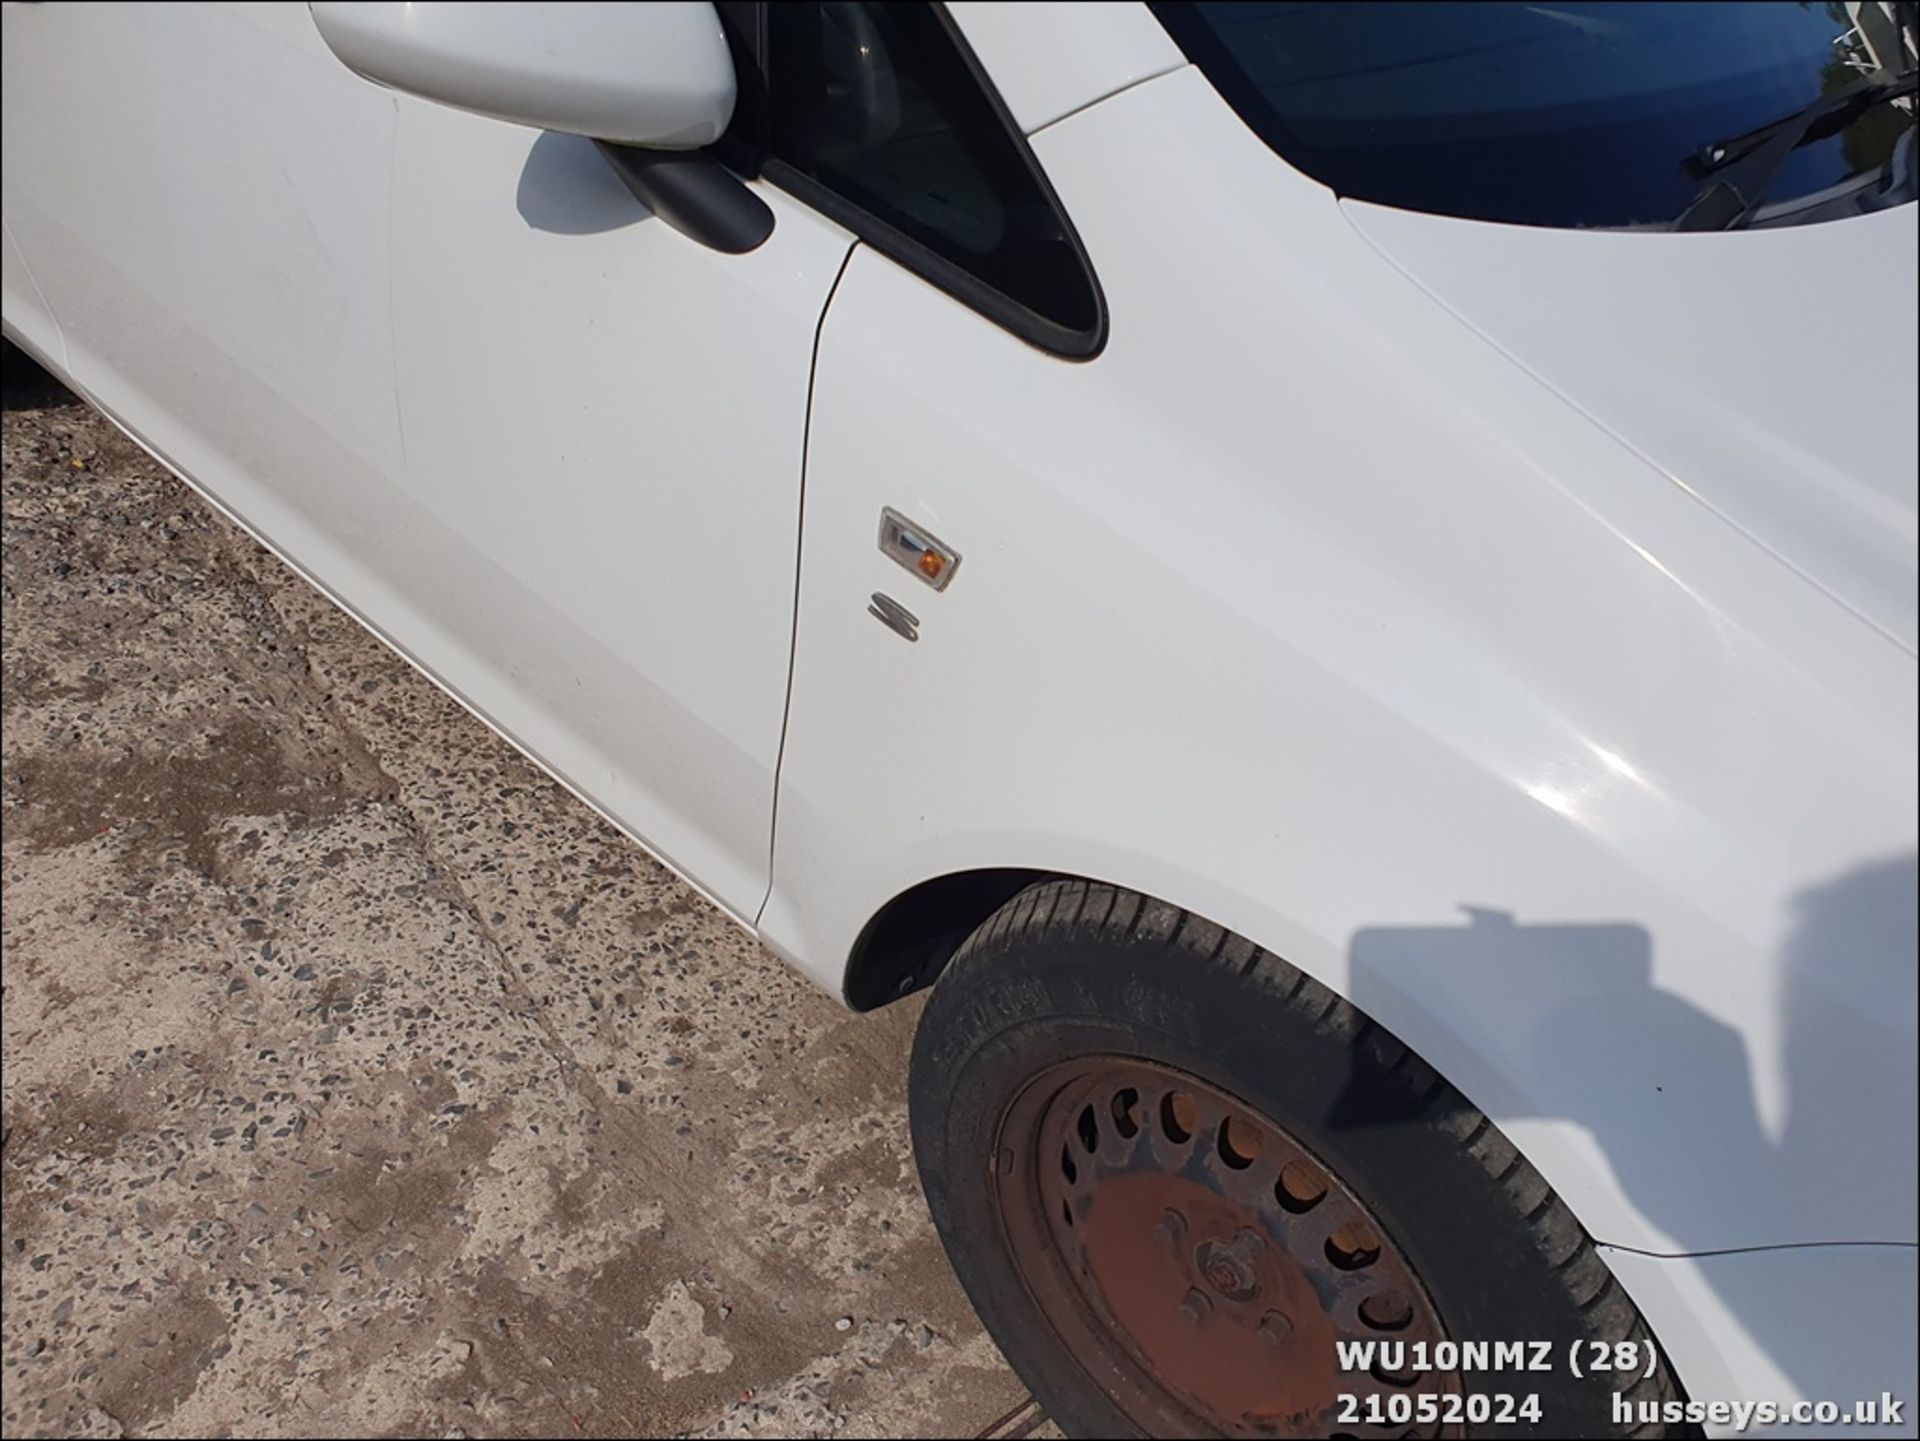 10/10 VAUXHALL CORSA S CDTI 73 ECOFLEX - 1248cc 3dr Hatchback (White, 61k) - Image 29 of 48